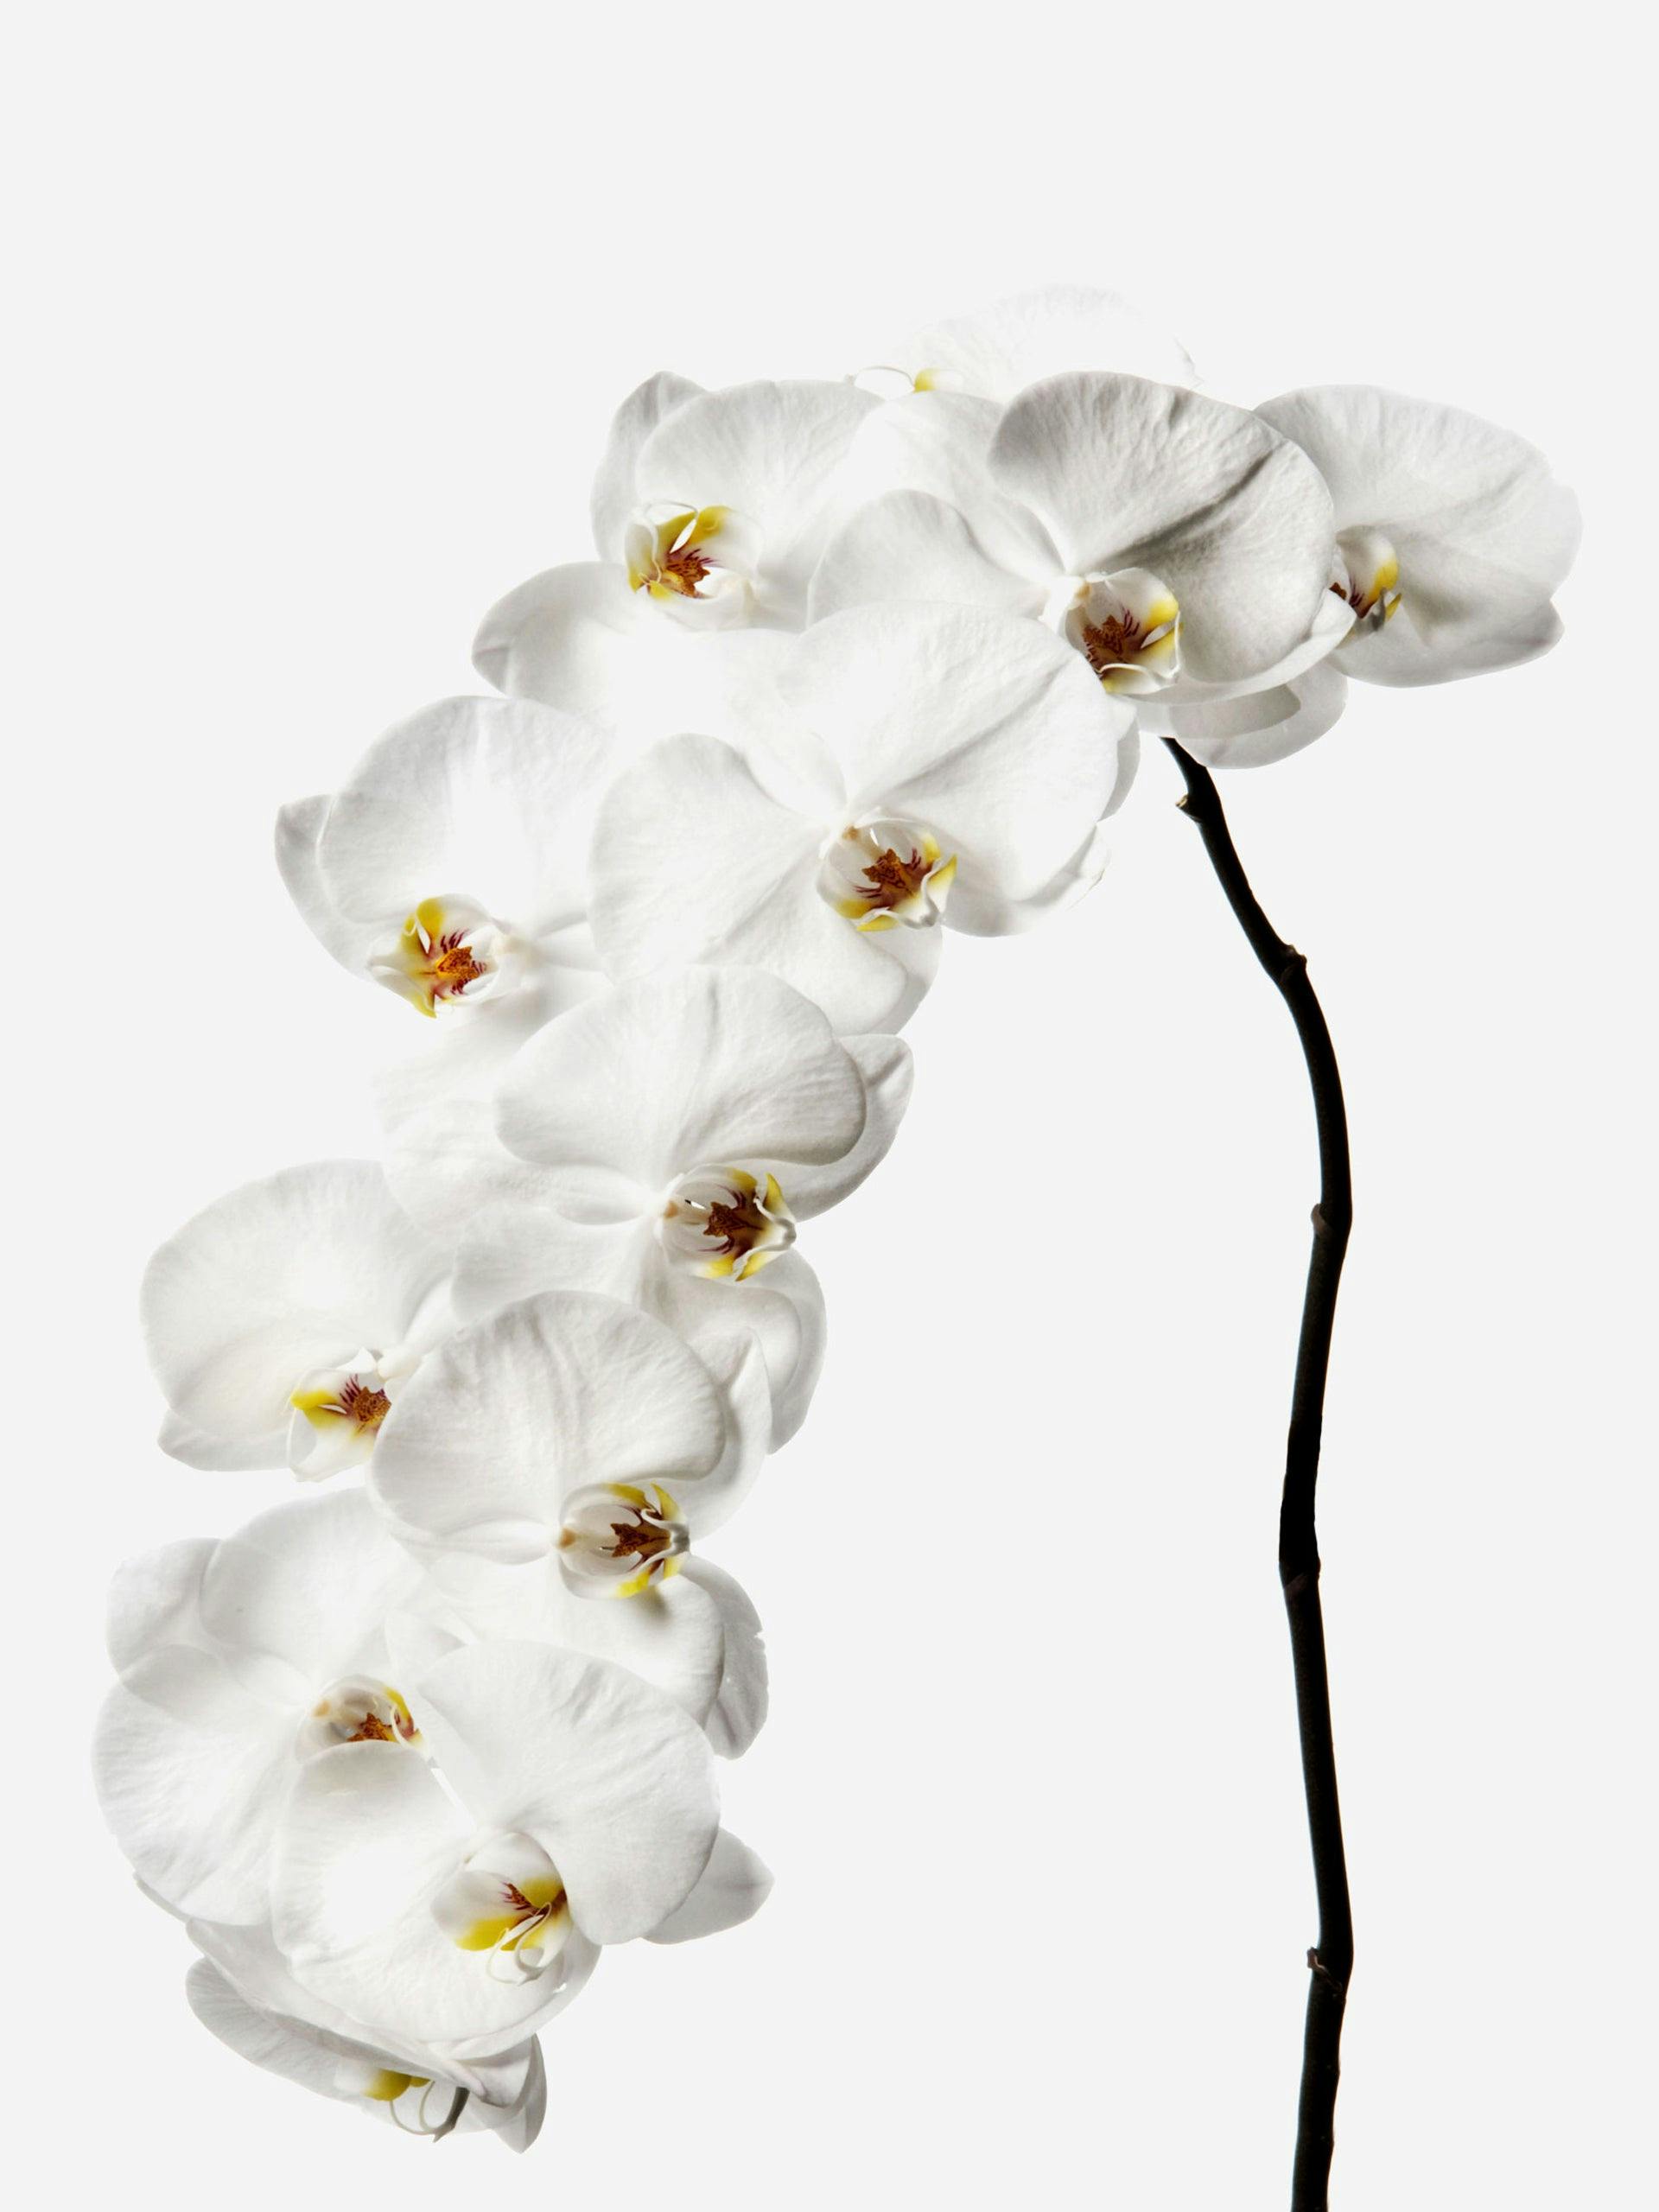 Snow white phalaenopsis cut orchid flower